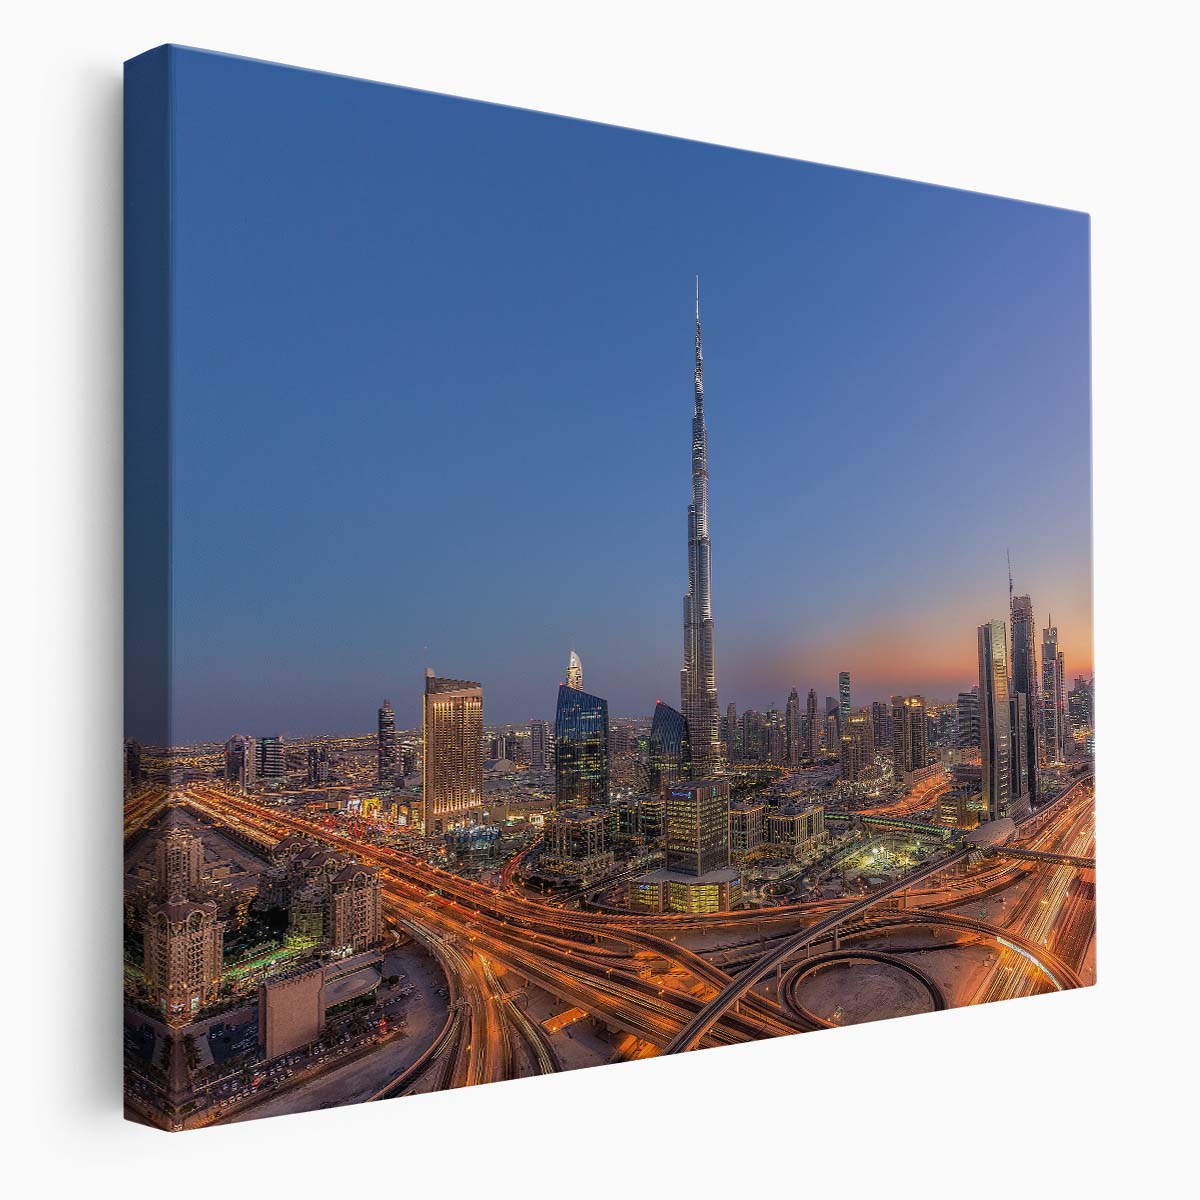 Dubai's Iconic Burj Khalifa Skyline Night View Wall Art by Luxuriance Designs. Made in USA.